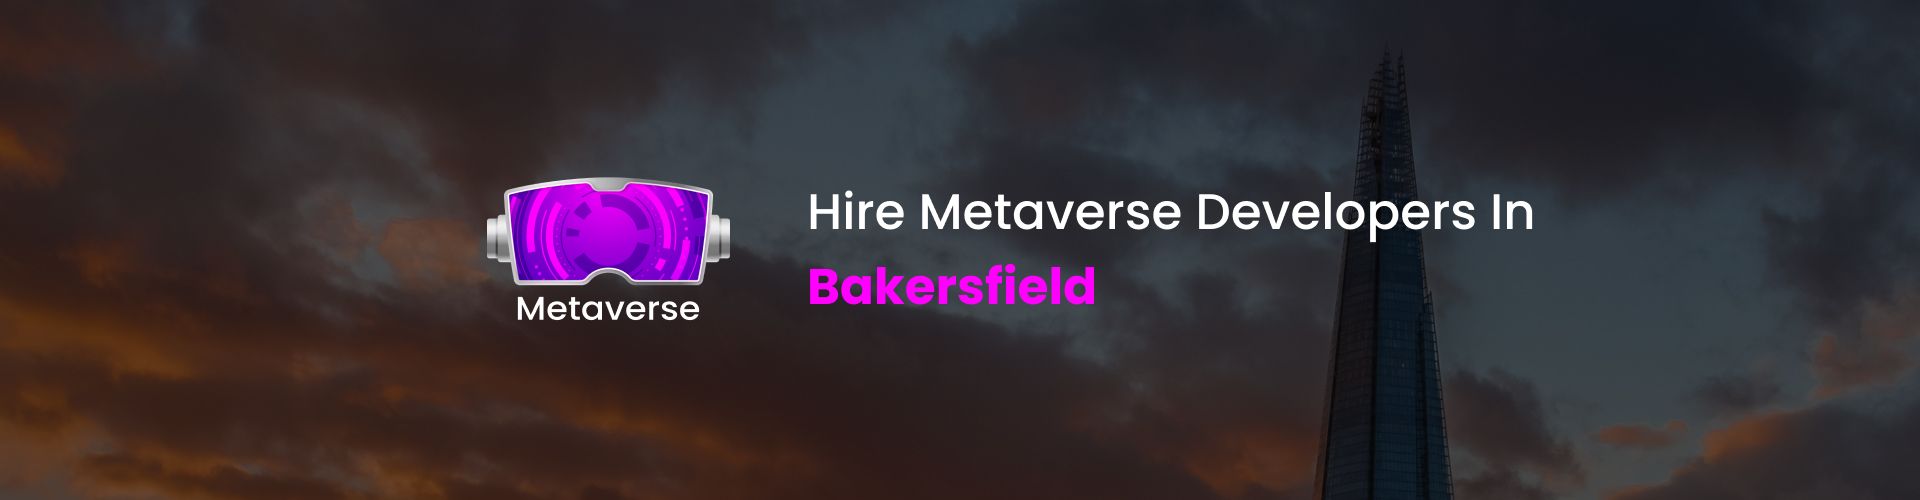 hire metaverse developers in bakersfield